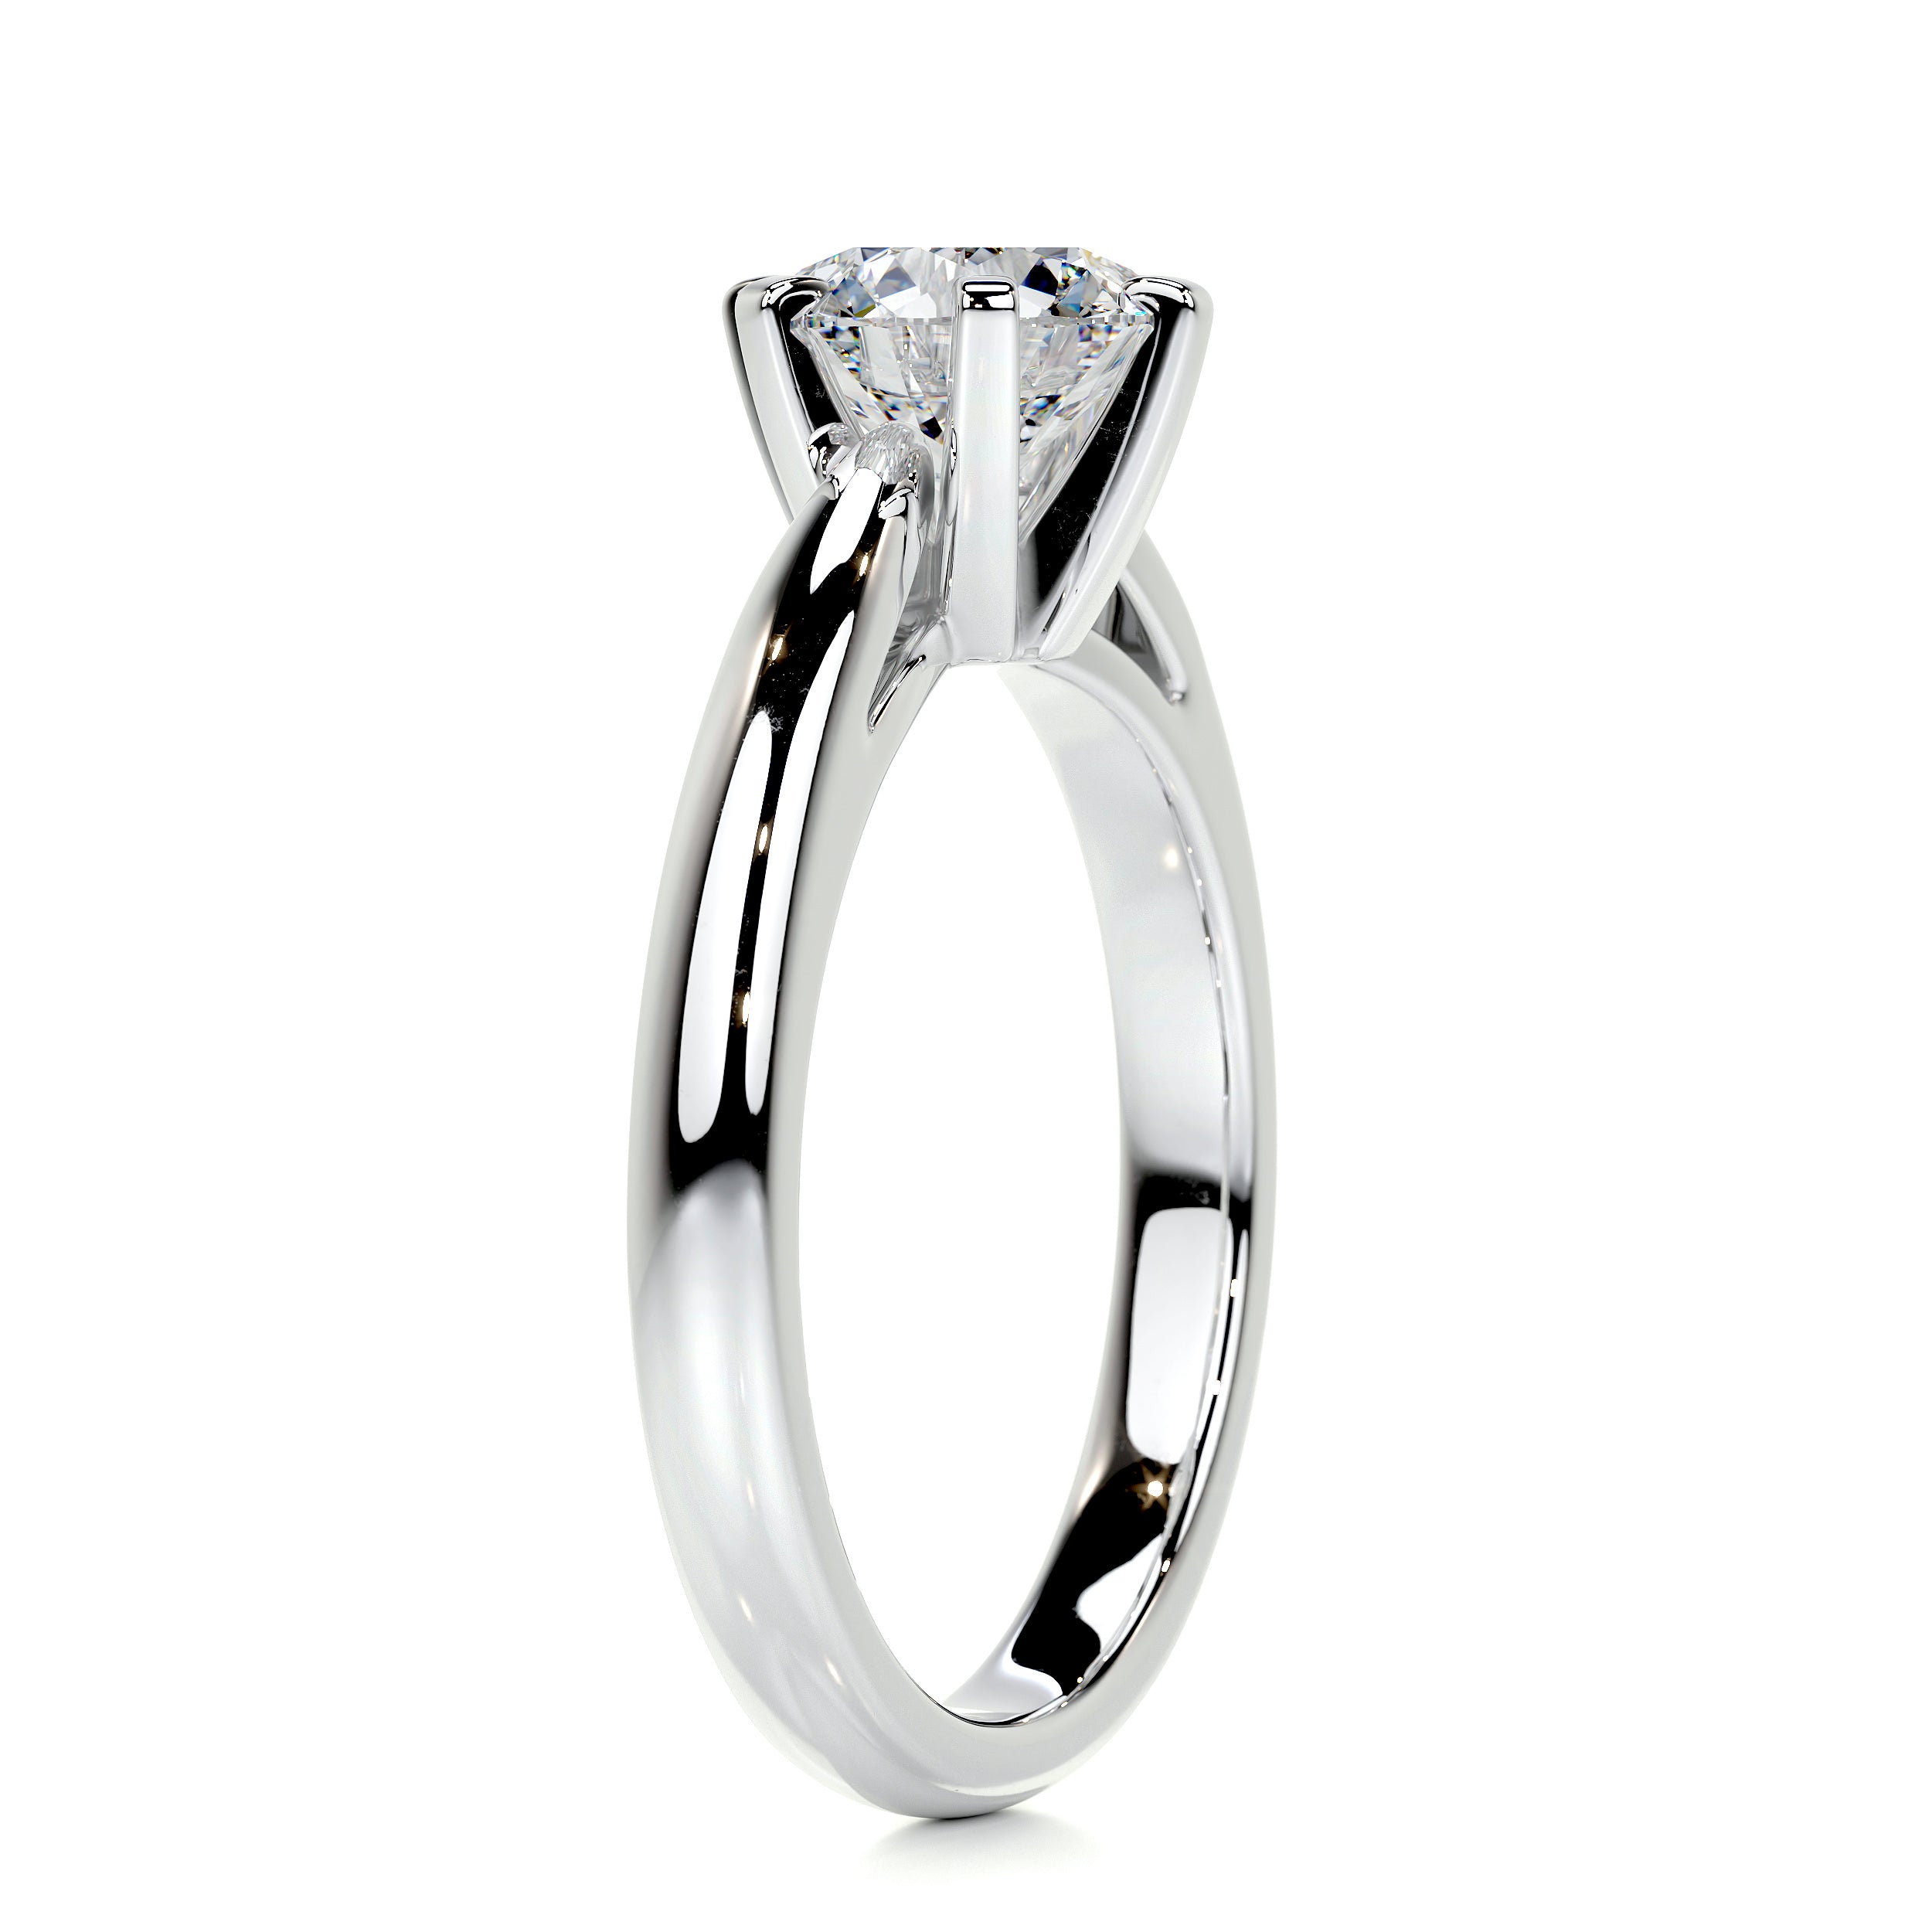 Talia Diamond Engagement Ring   (1 Carat) - 14K White Gold